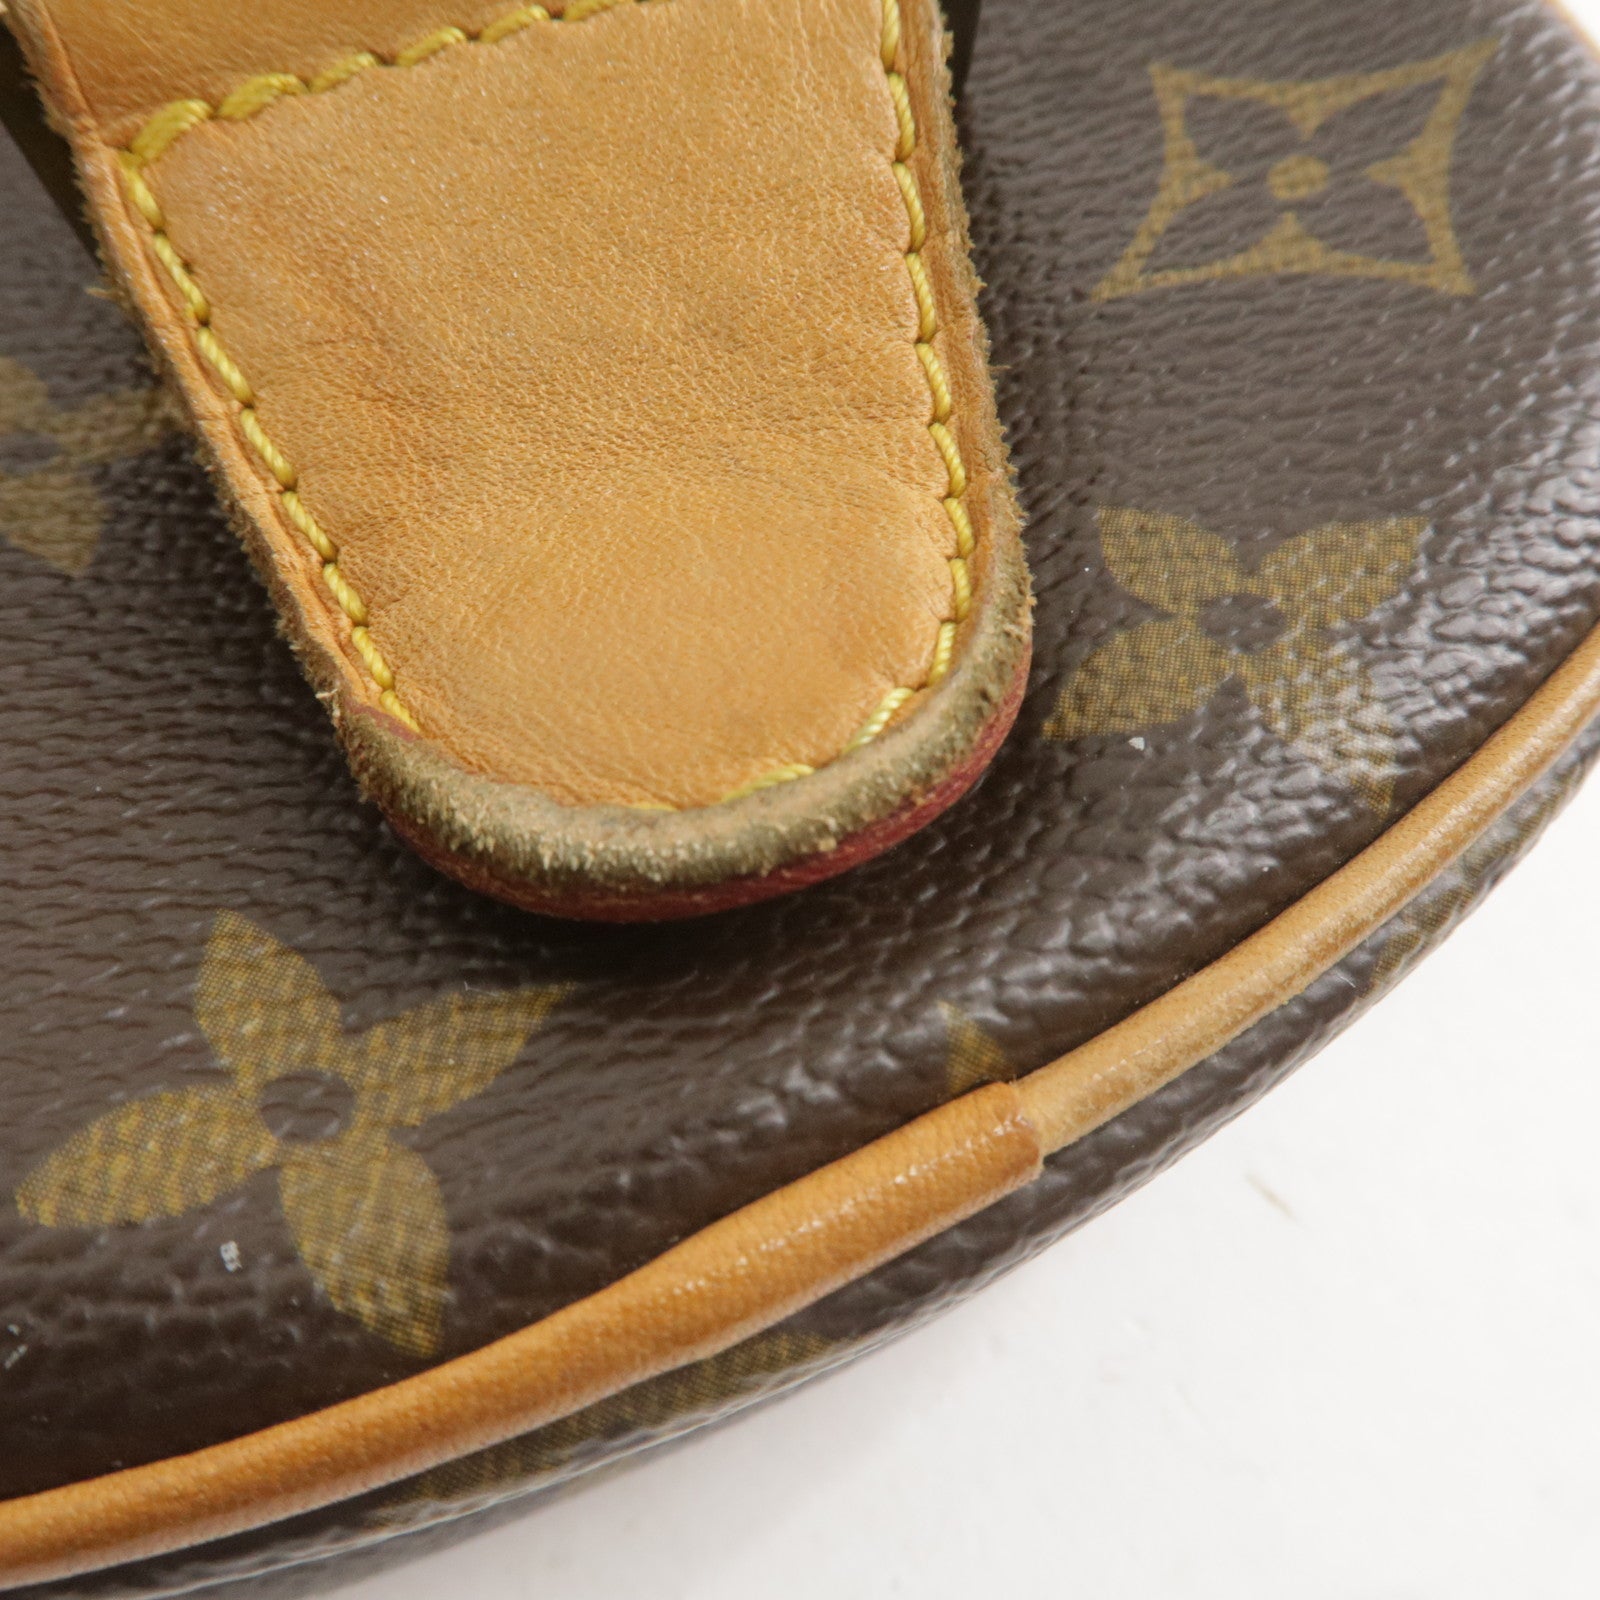 Louis Vuitton Vintage Leather Monogram Crossbody Saddle Bag